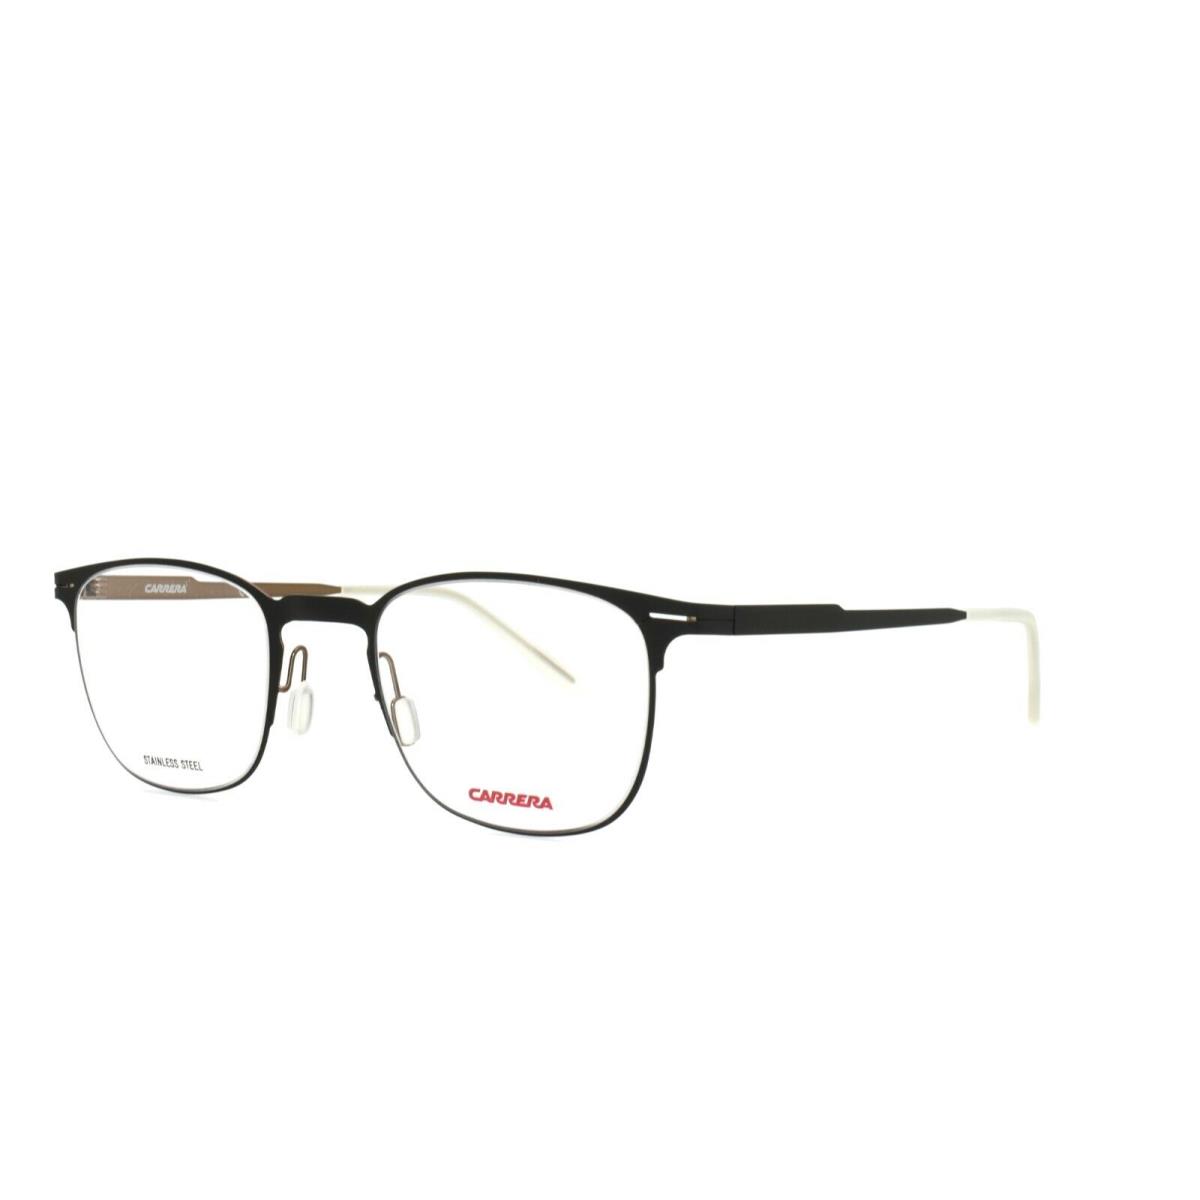 Carrera Rx Eyeglasses Matte Brown 6660 Vbj 48-22-145